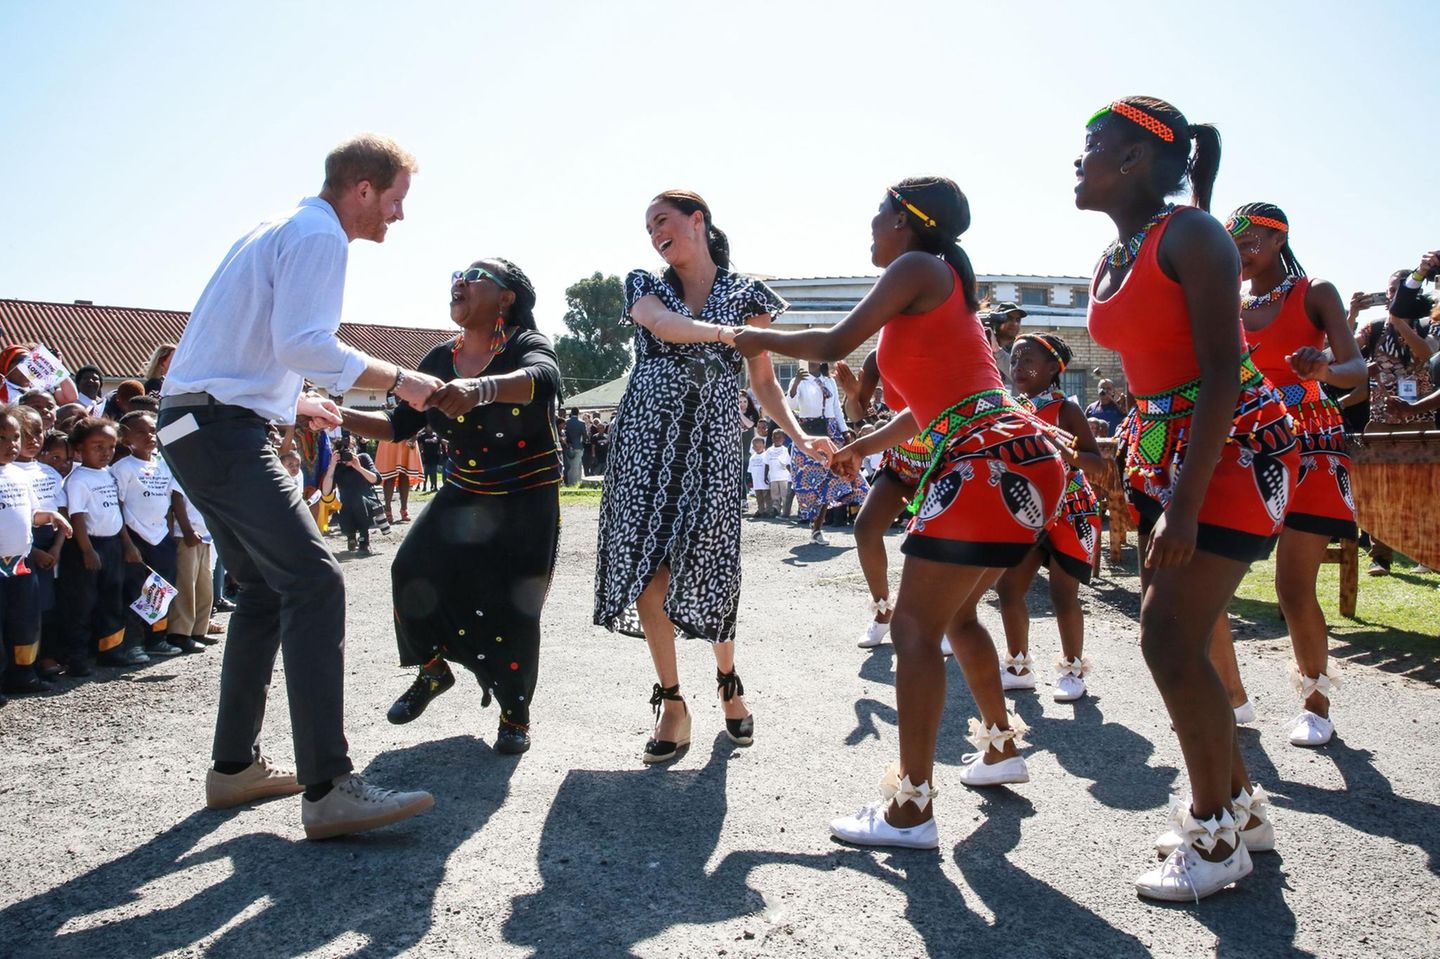 Herzogin Meghan + Prinz Harry in Afrika: Meghan Markle und Prinz Harry tanzen